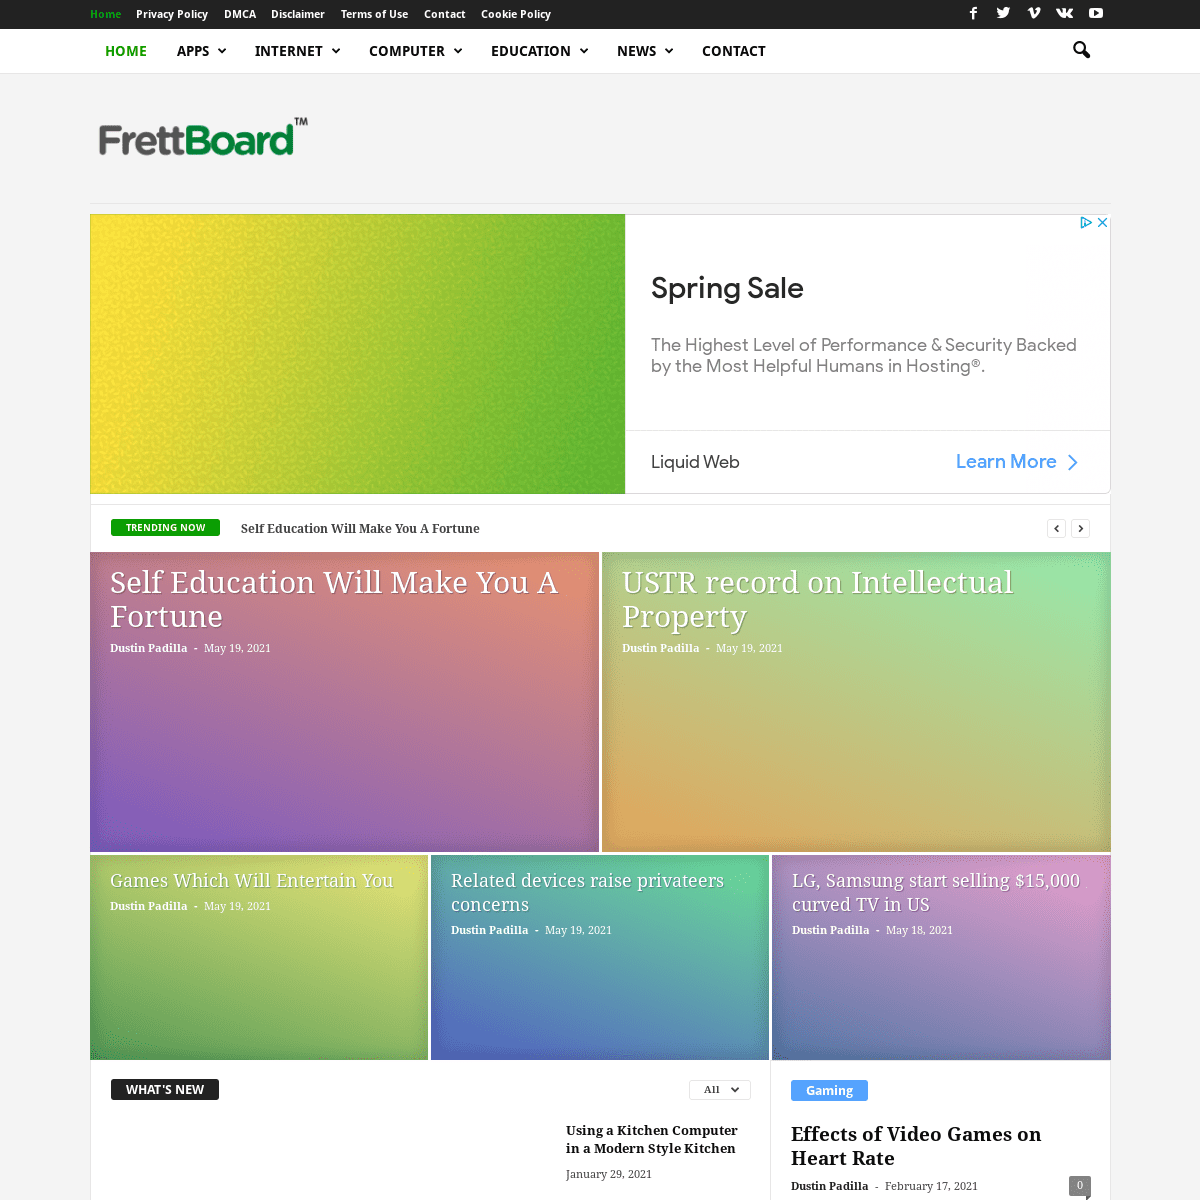 A complete backup of https://frettboard.com